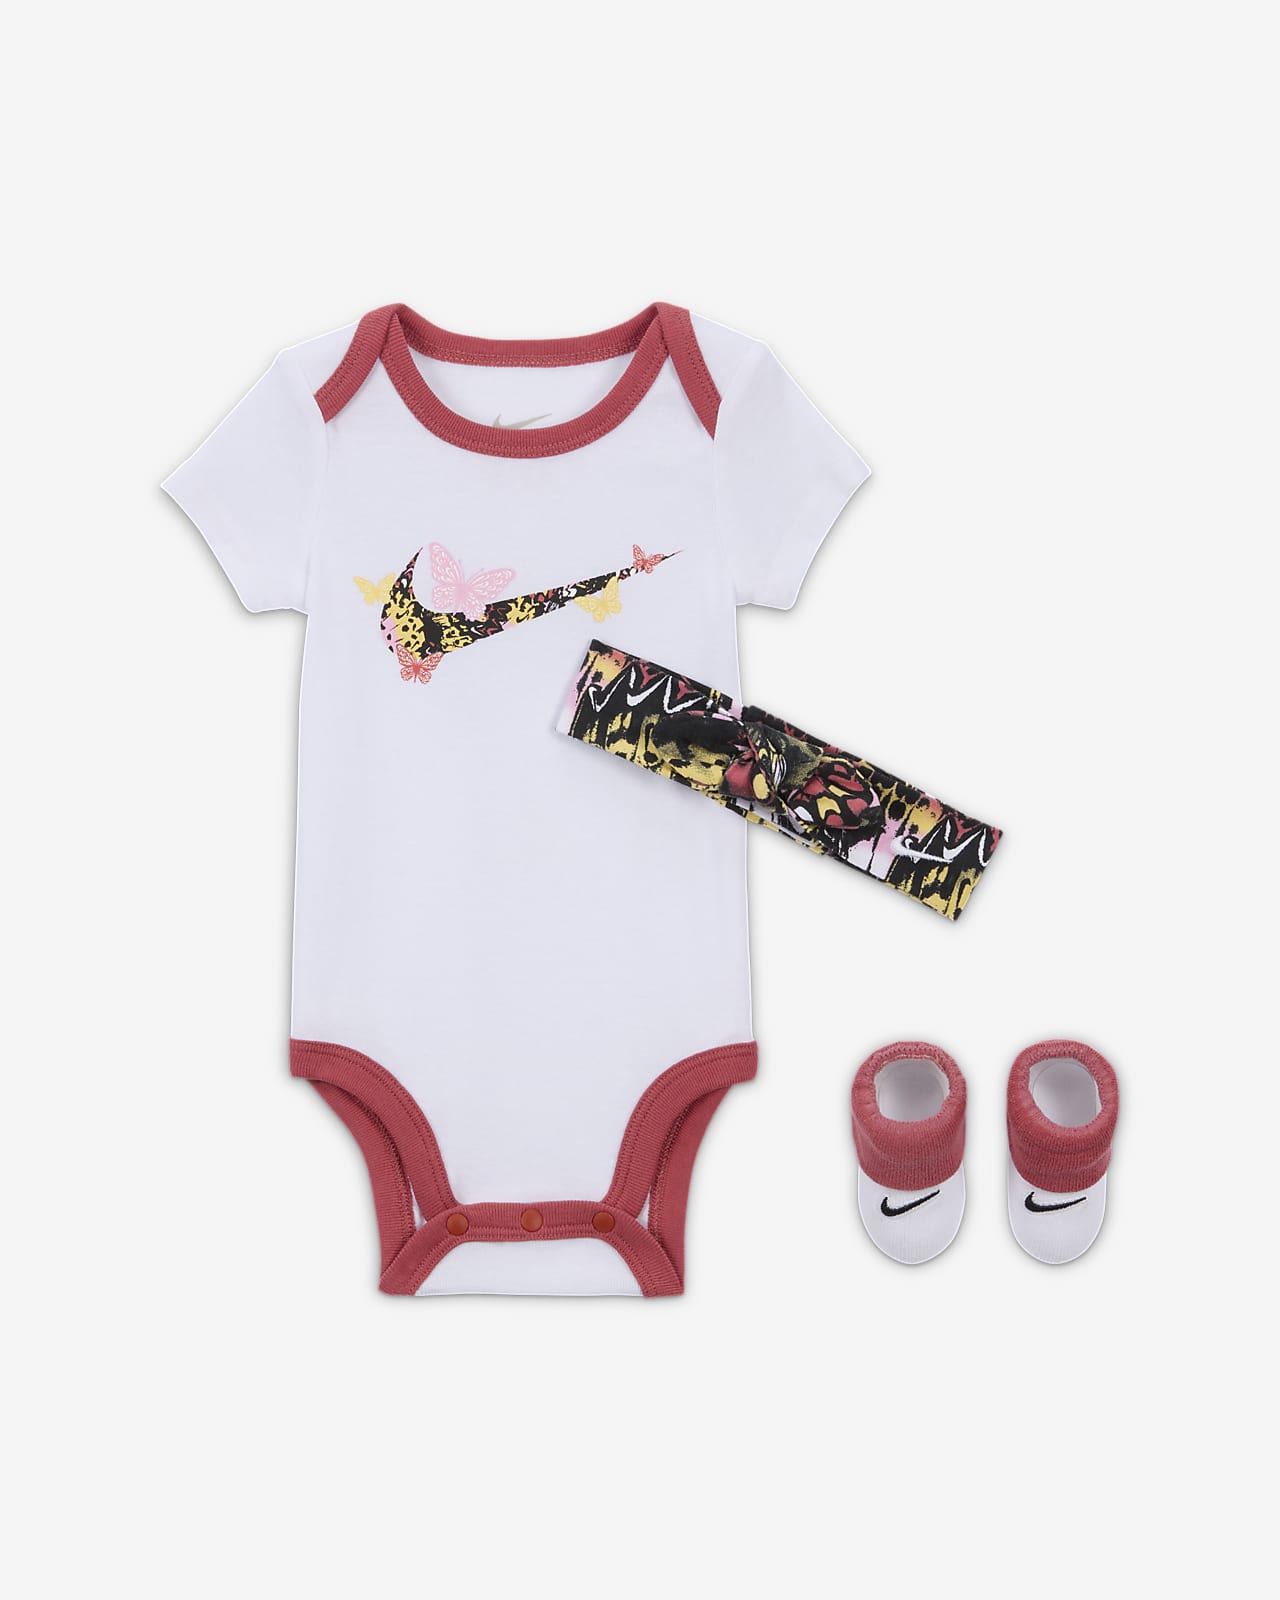 Nike Metamorph Baby 3-Piece Boxed Set